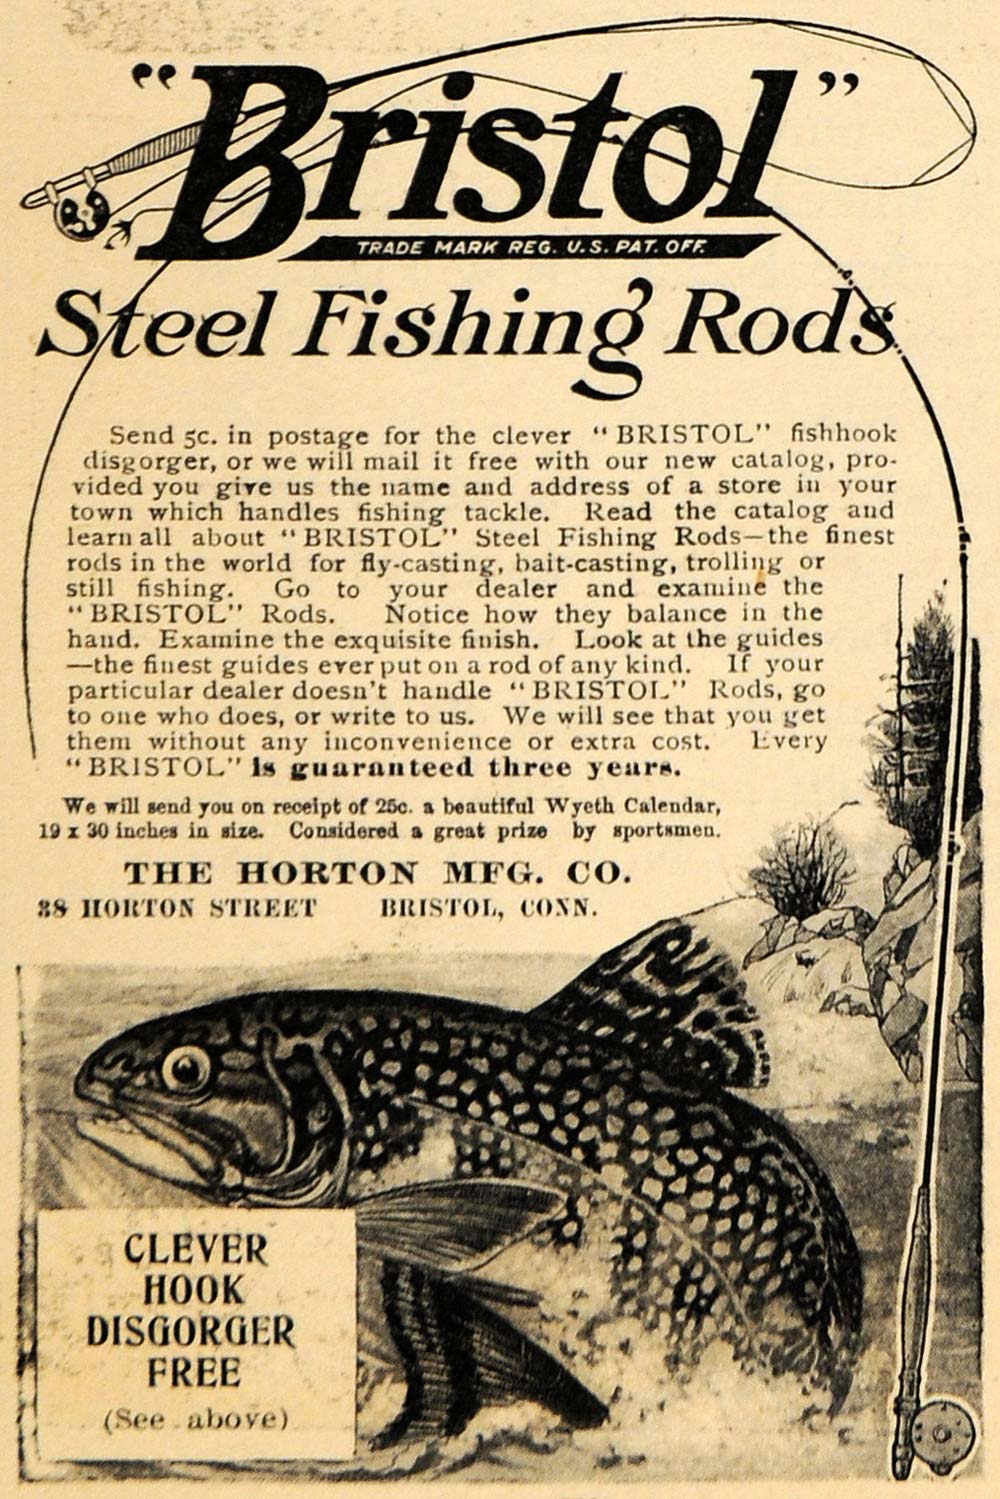 1910 Ad Bristol Steel Fishing Rods Hook Disgorger - ORIGINAL